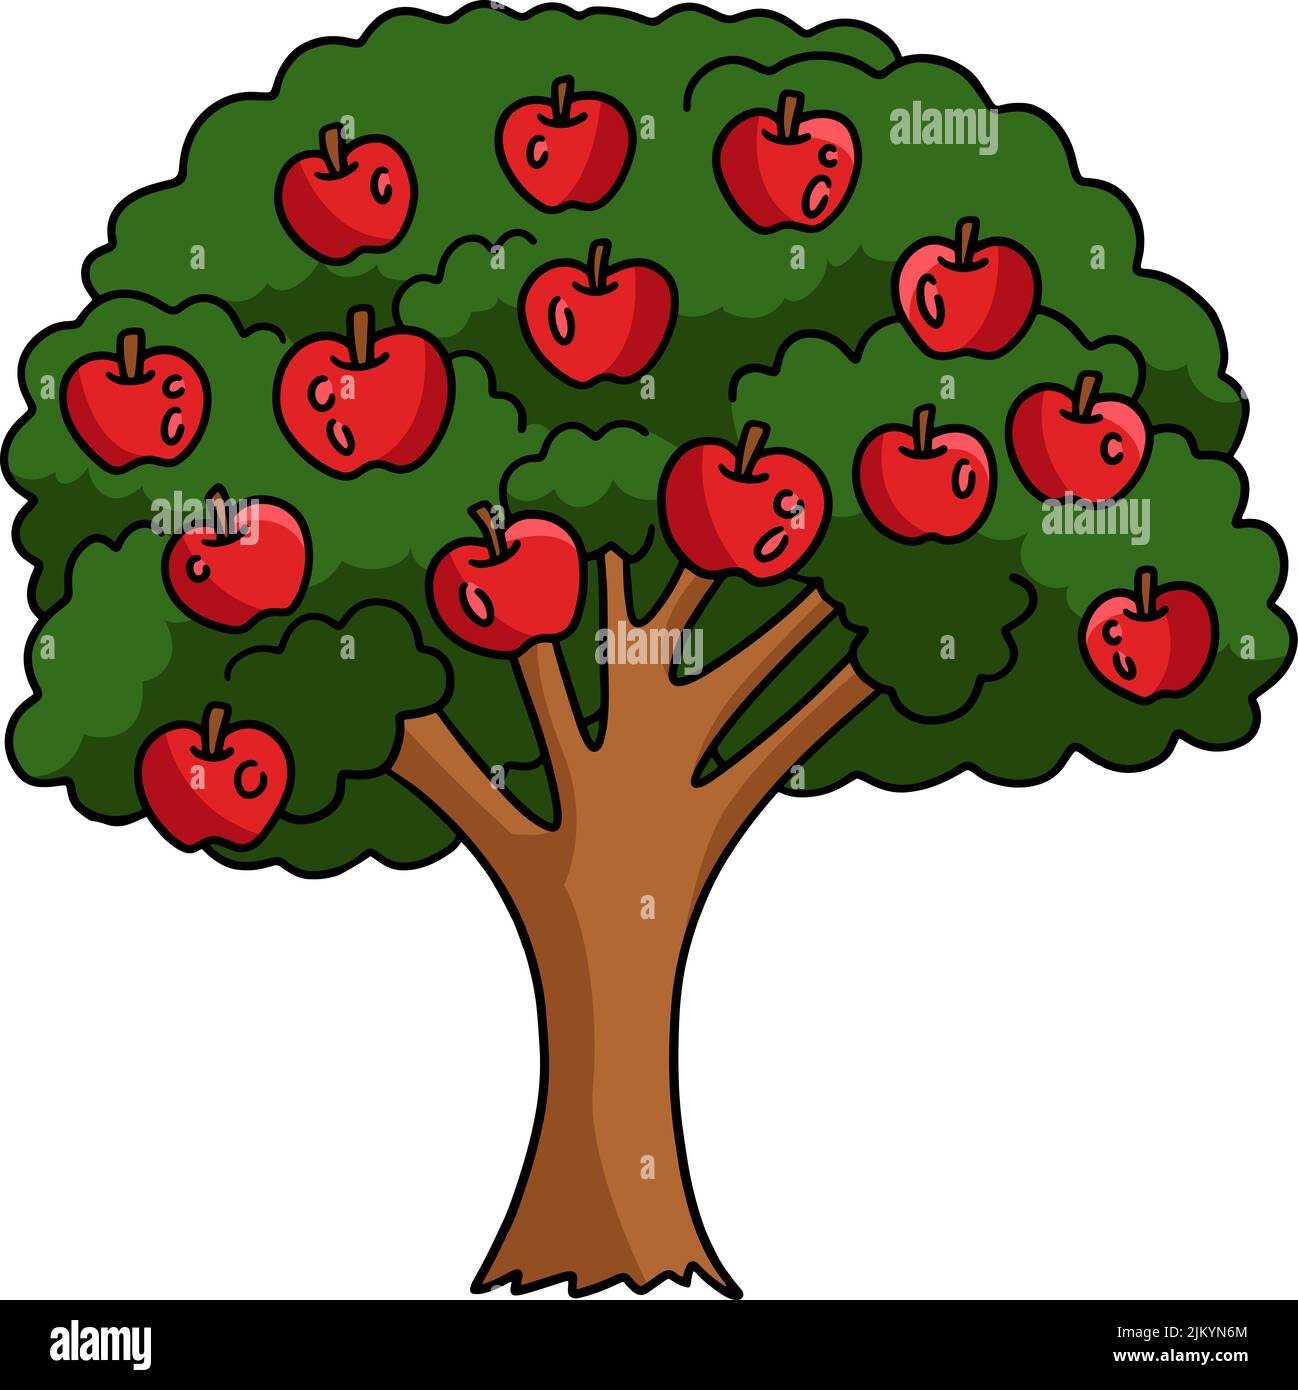 Apple tree cartoon Stock Vector Images - Alamy